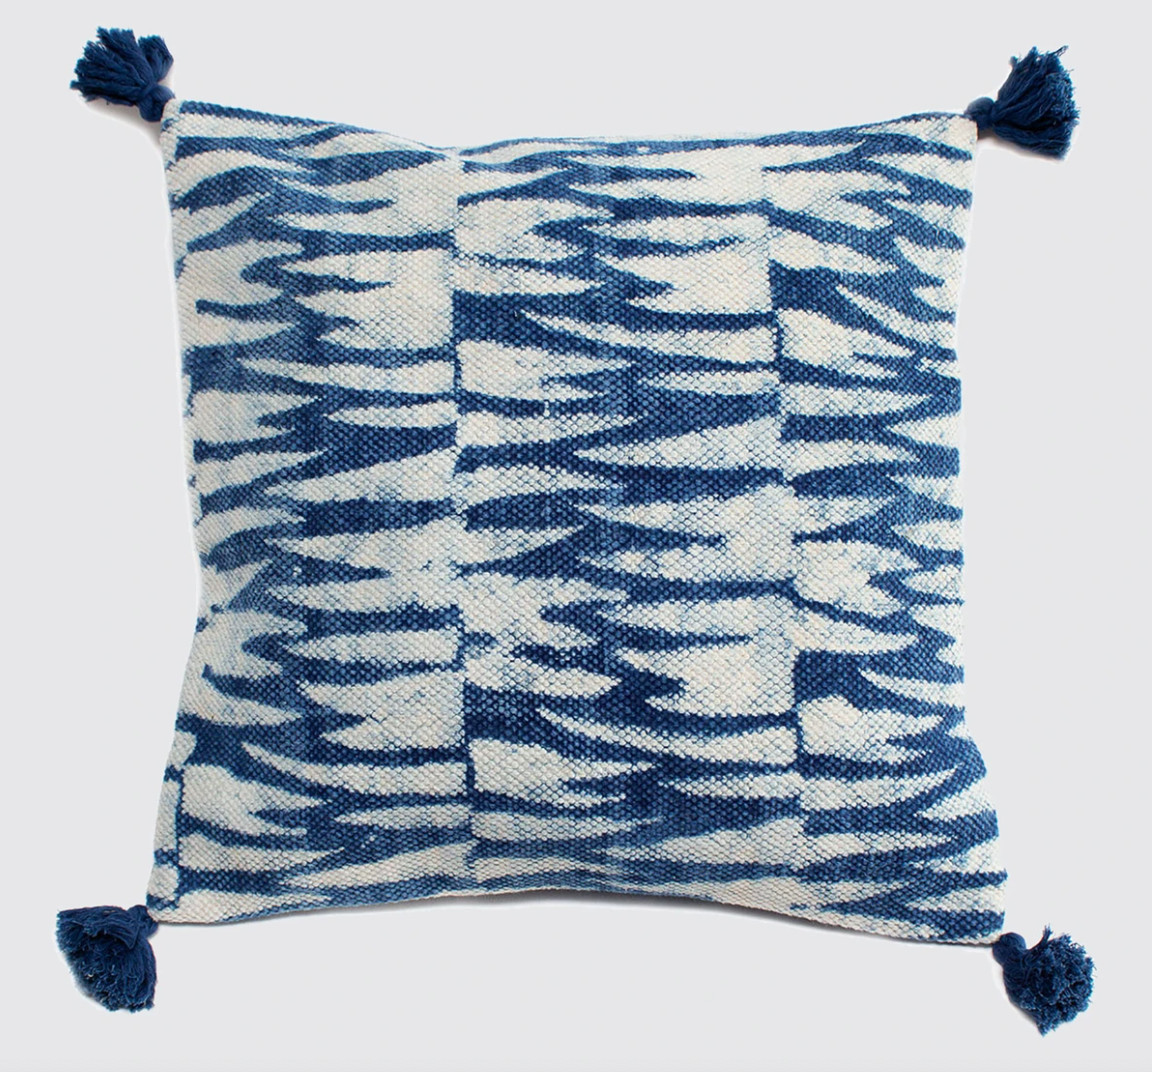 Indigo Block Printed Tiger Cushion Cover